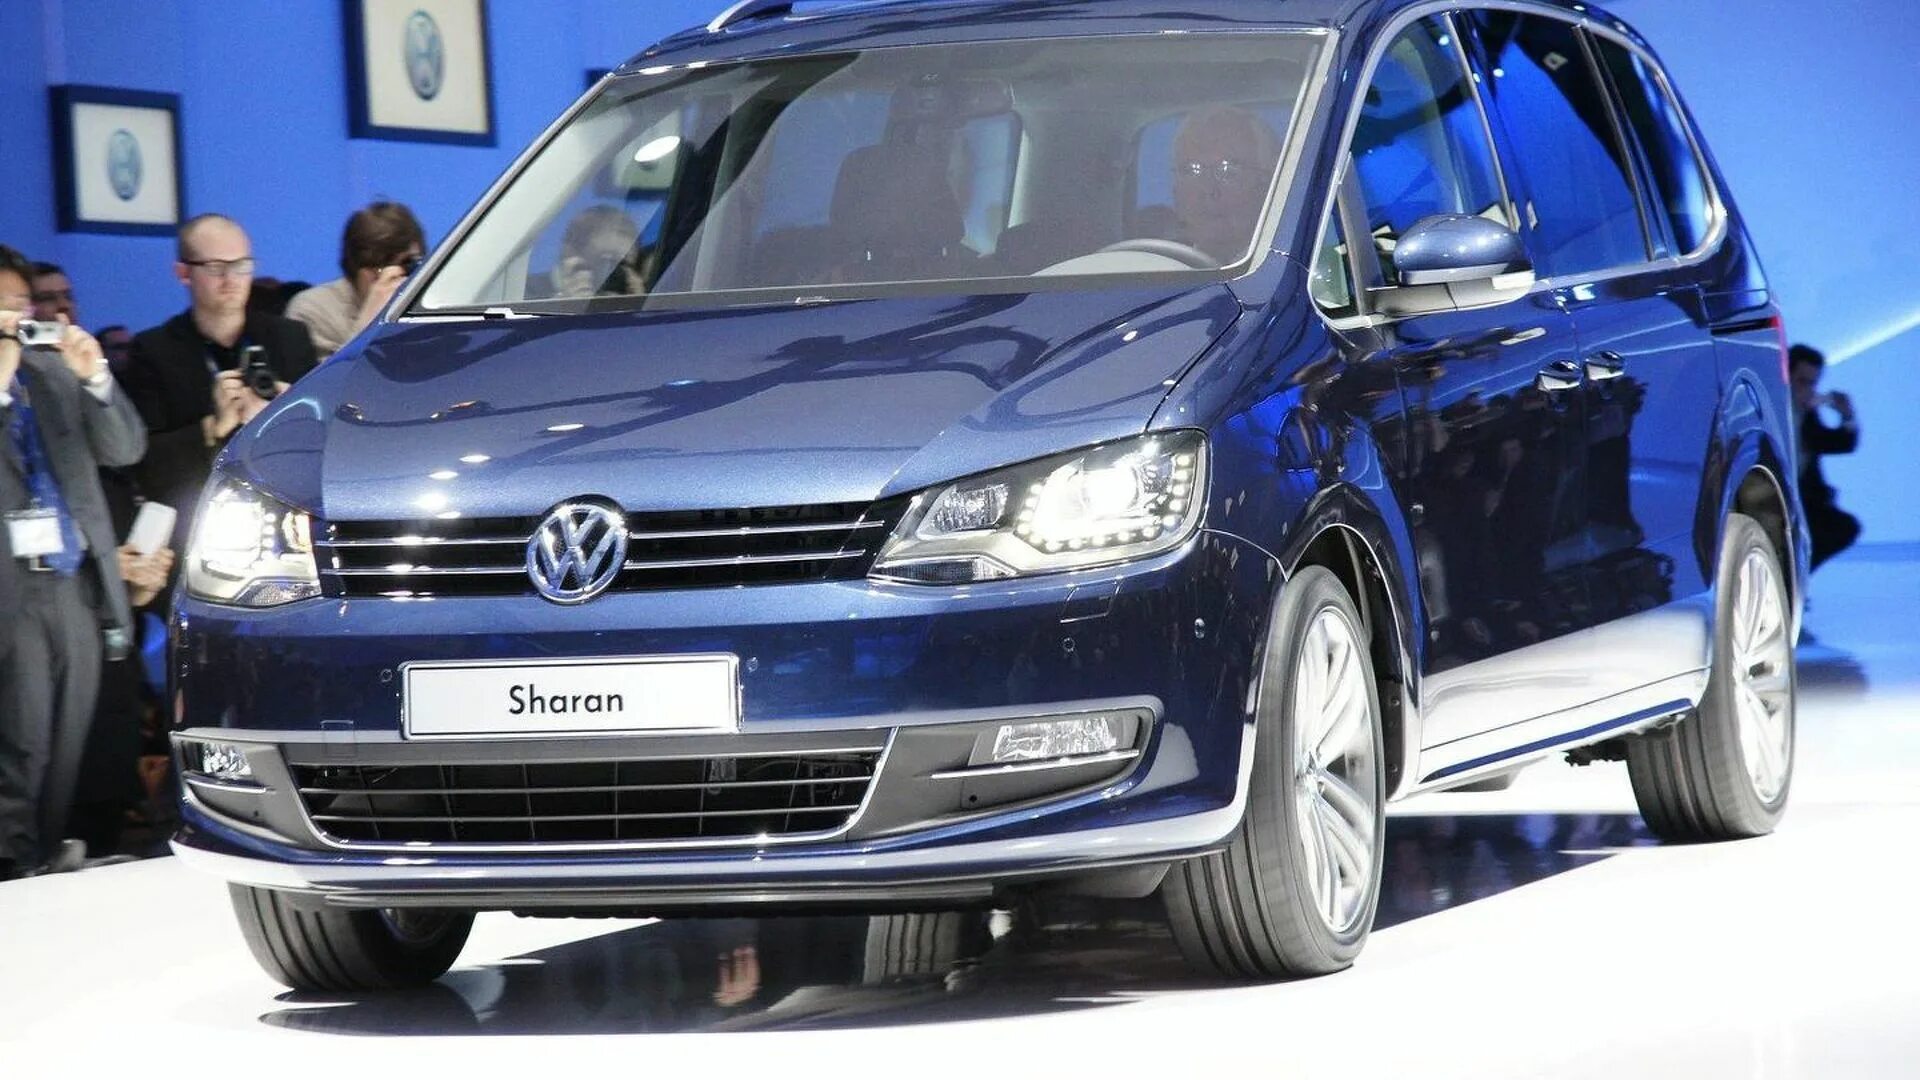 VW Sharan 2011. Фольксваген Шаран 2011. Фольксваген Шаран 2011 года. Фольксваген Шаран 3 поколения.